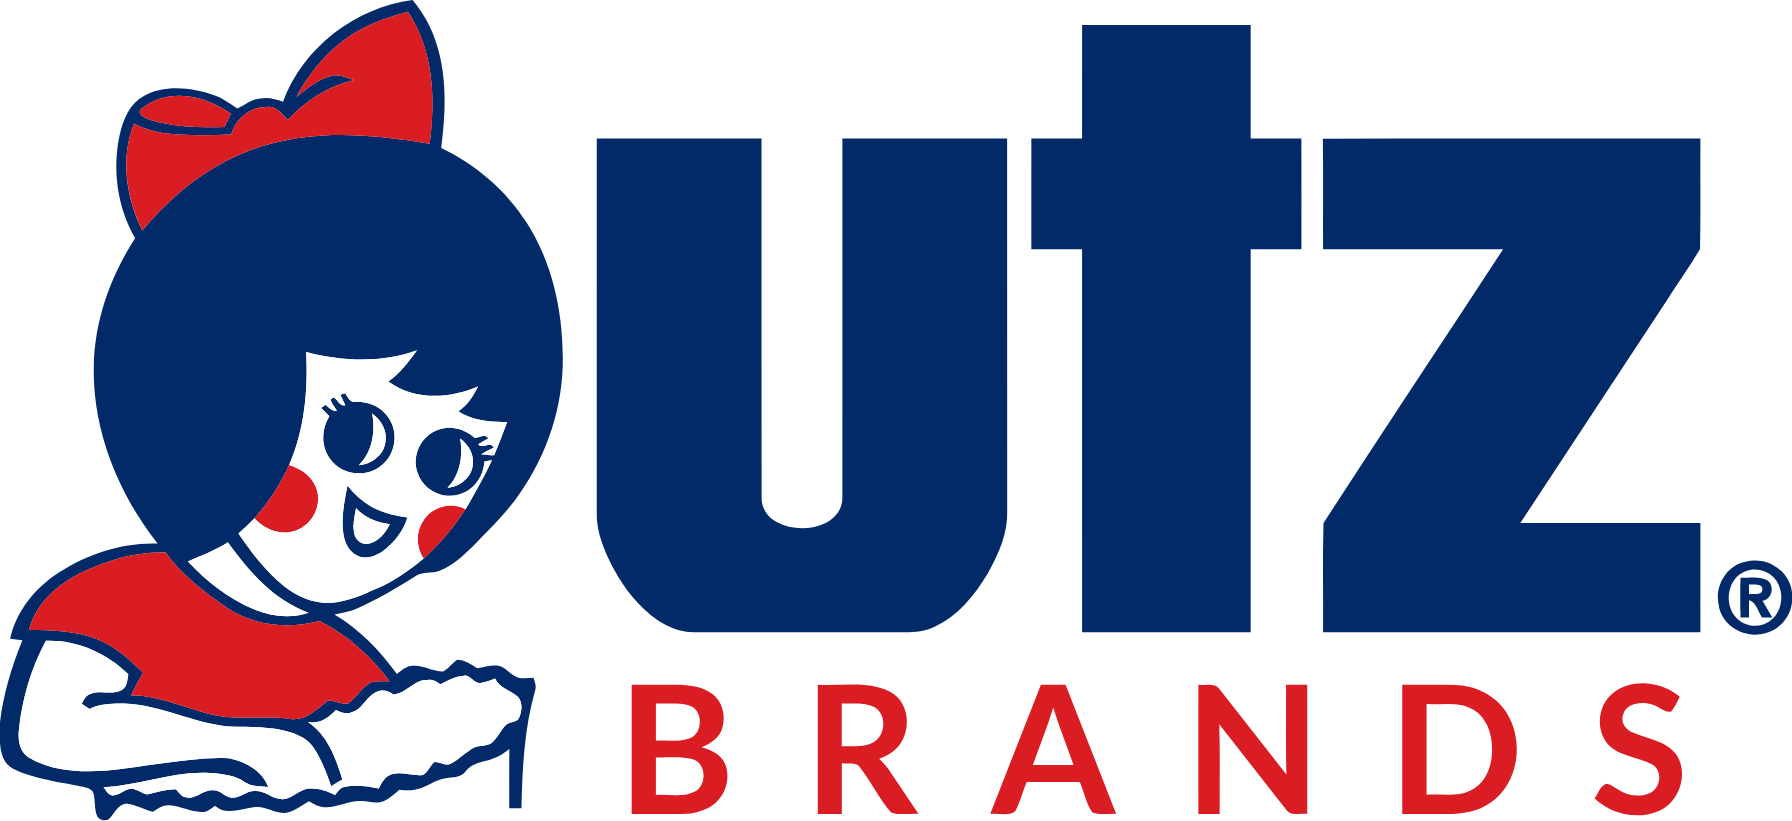 Utz Brands logo large (transparent PNG)